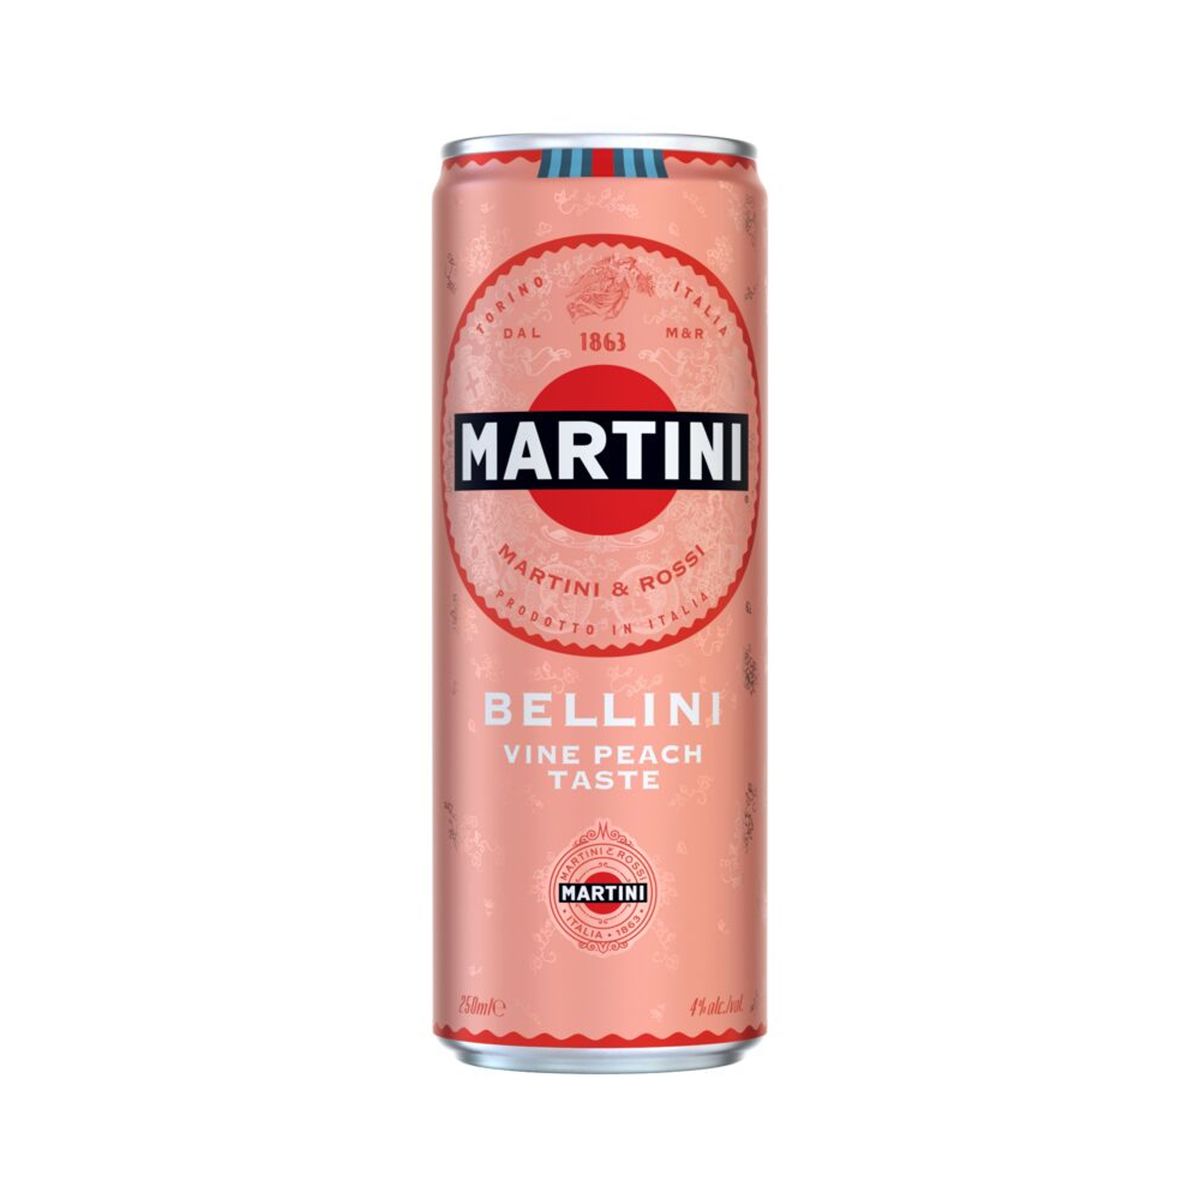 MARTINI Bellini Vine peach taste 25cl 4%